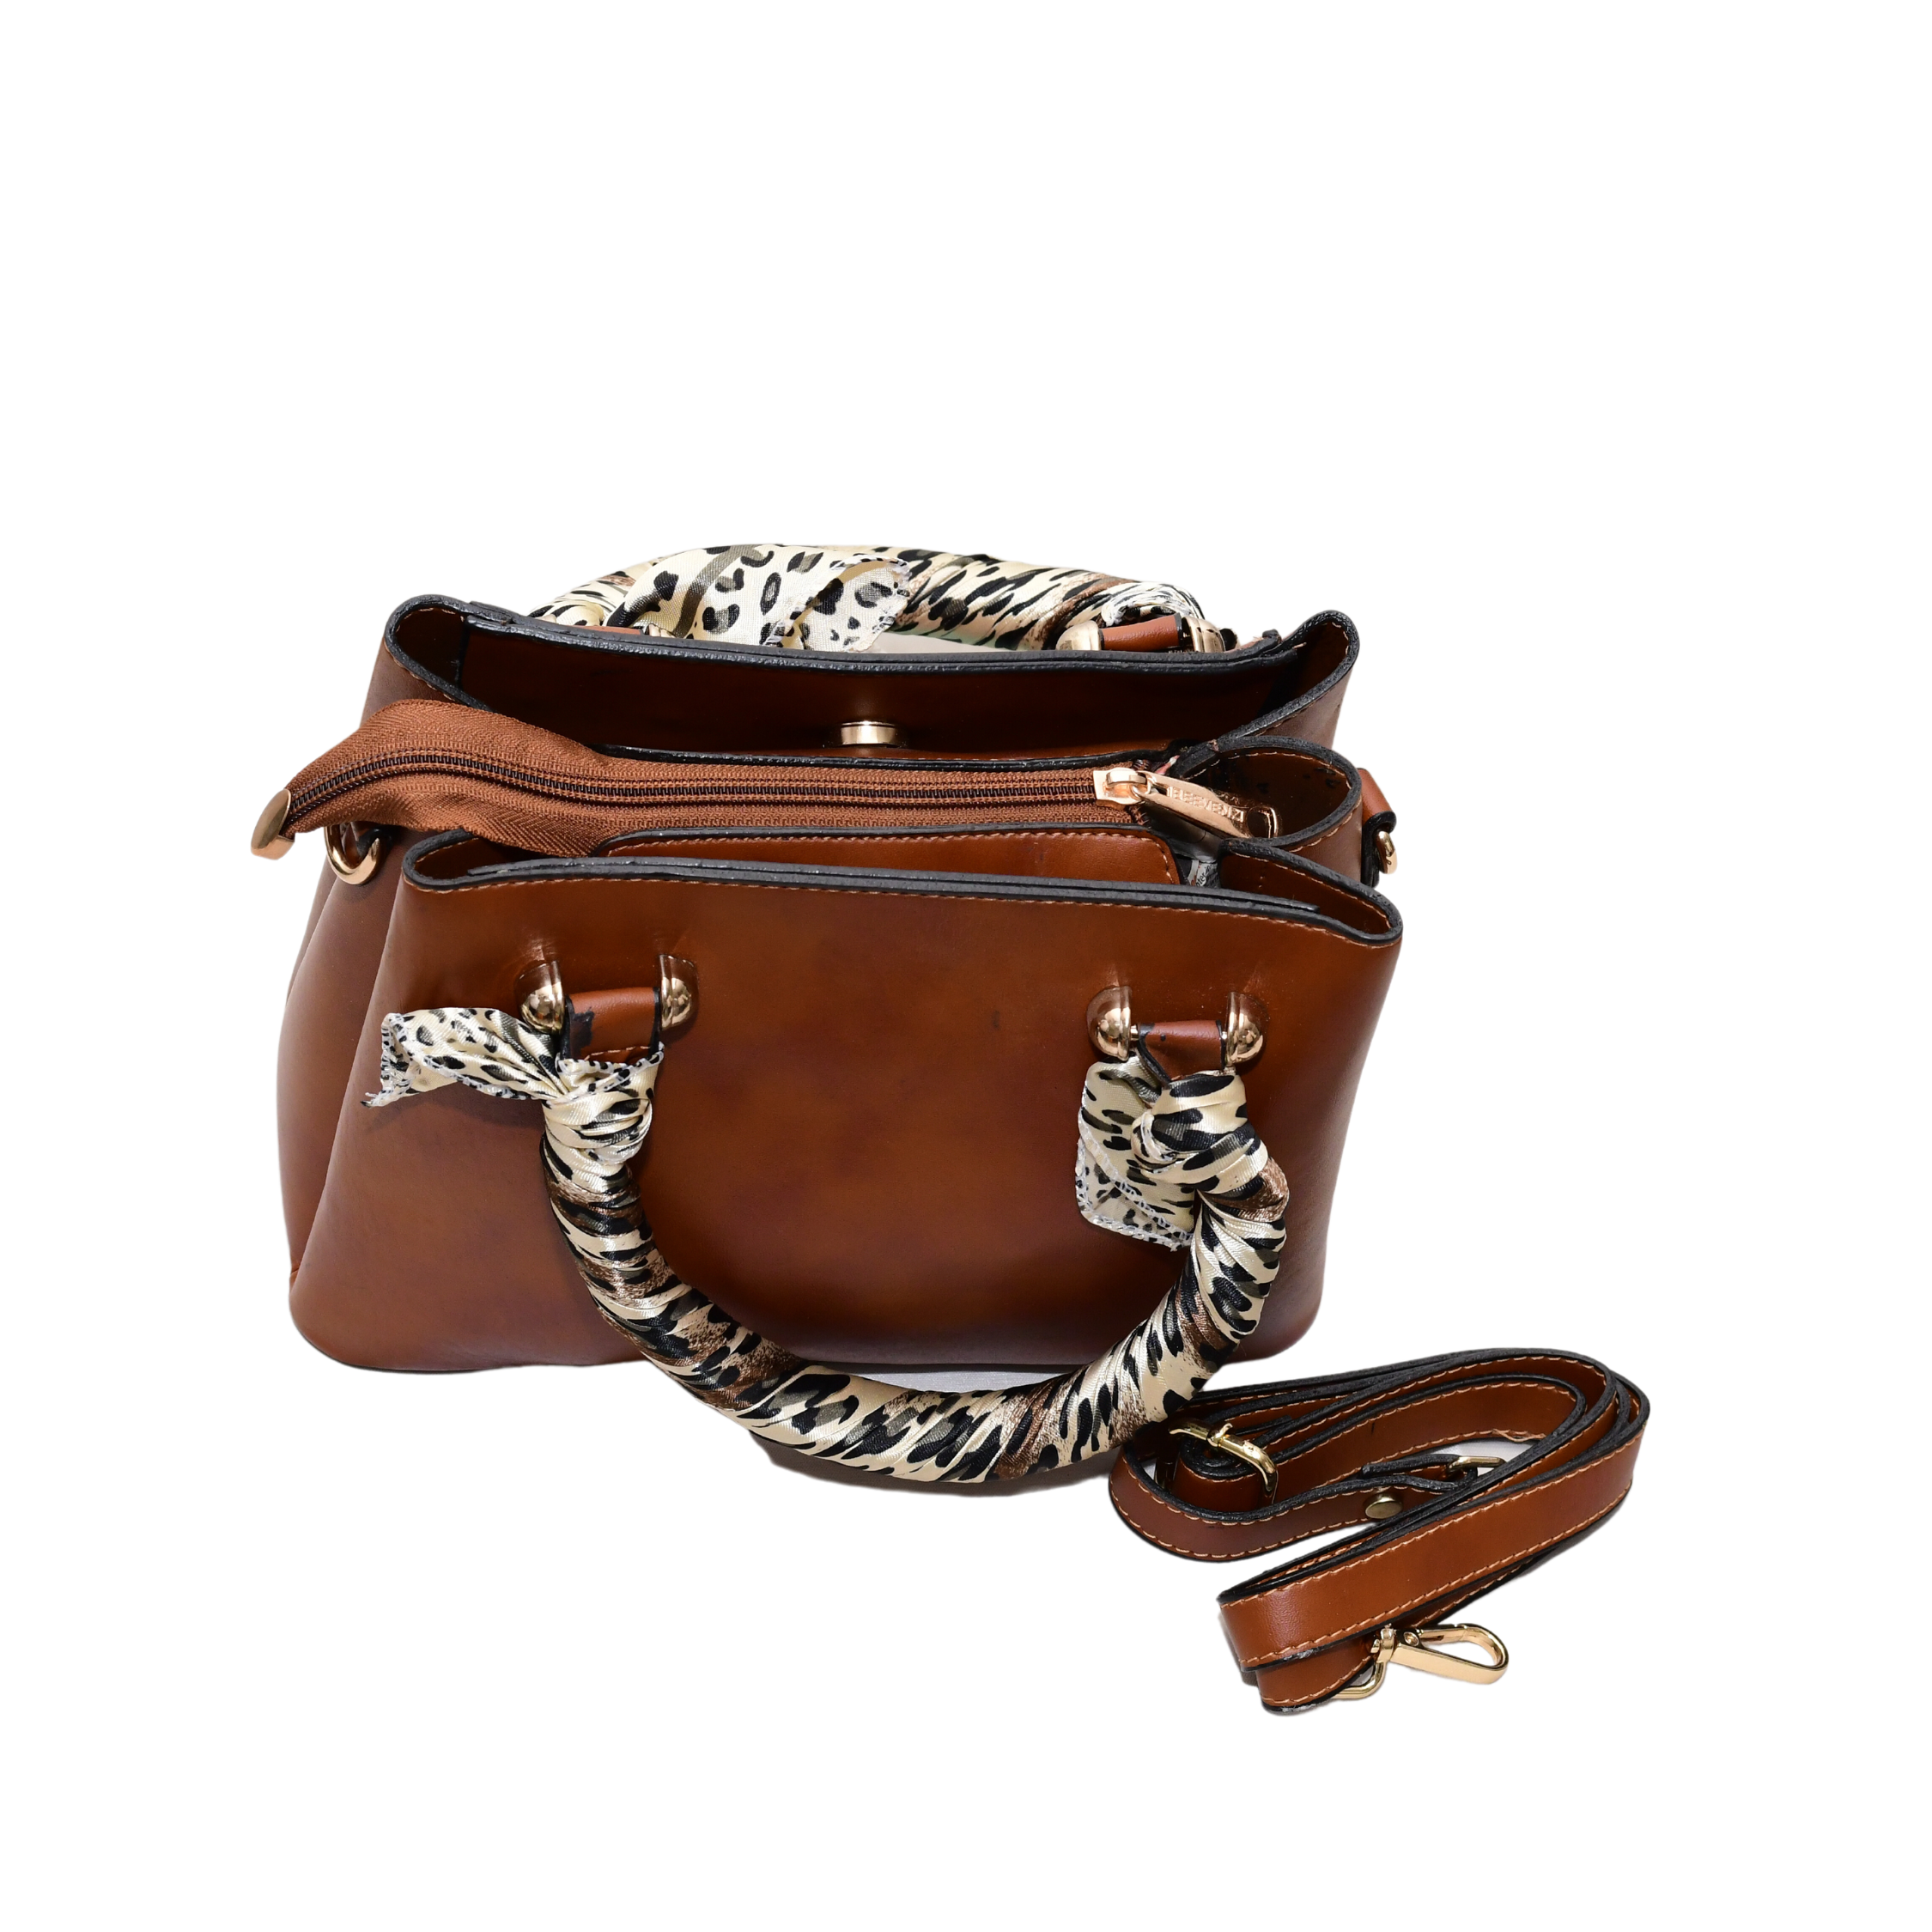 Luxury Women Handbag - Designer Luxury Women Handbag - Premium Faux leather , hand crafted tan brown with leopard print satin covered handle